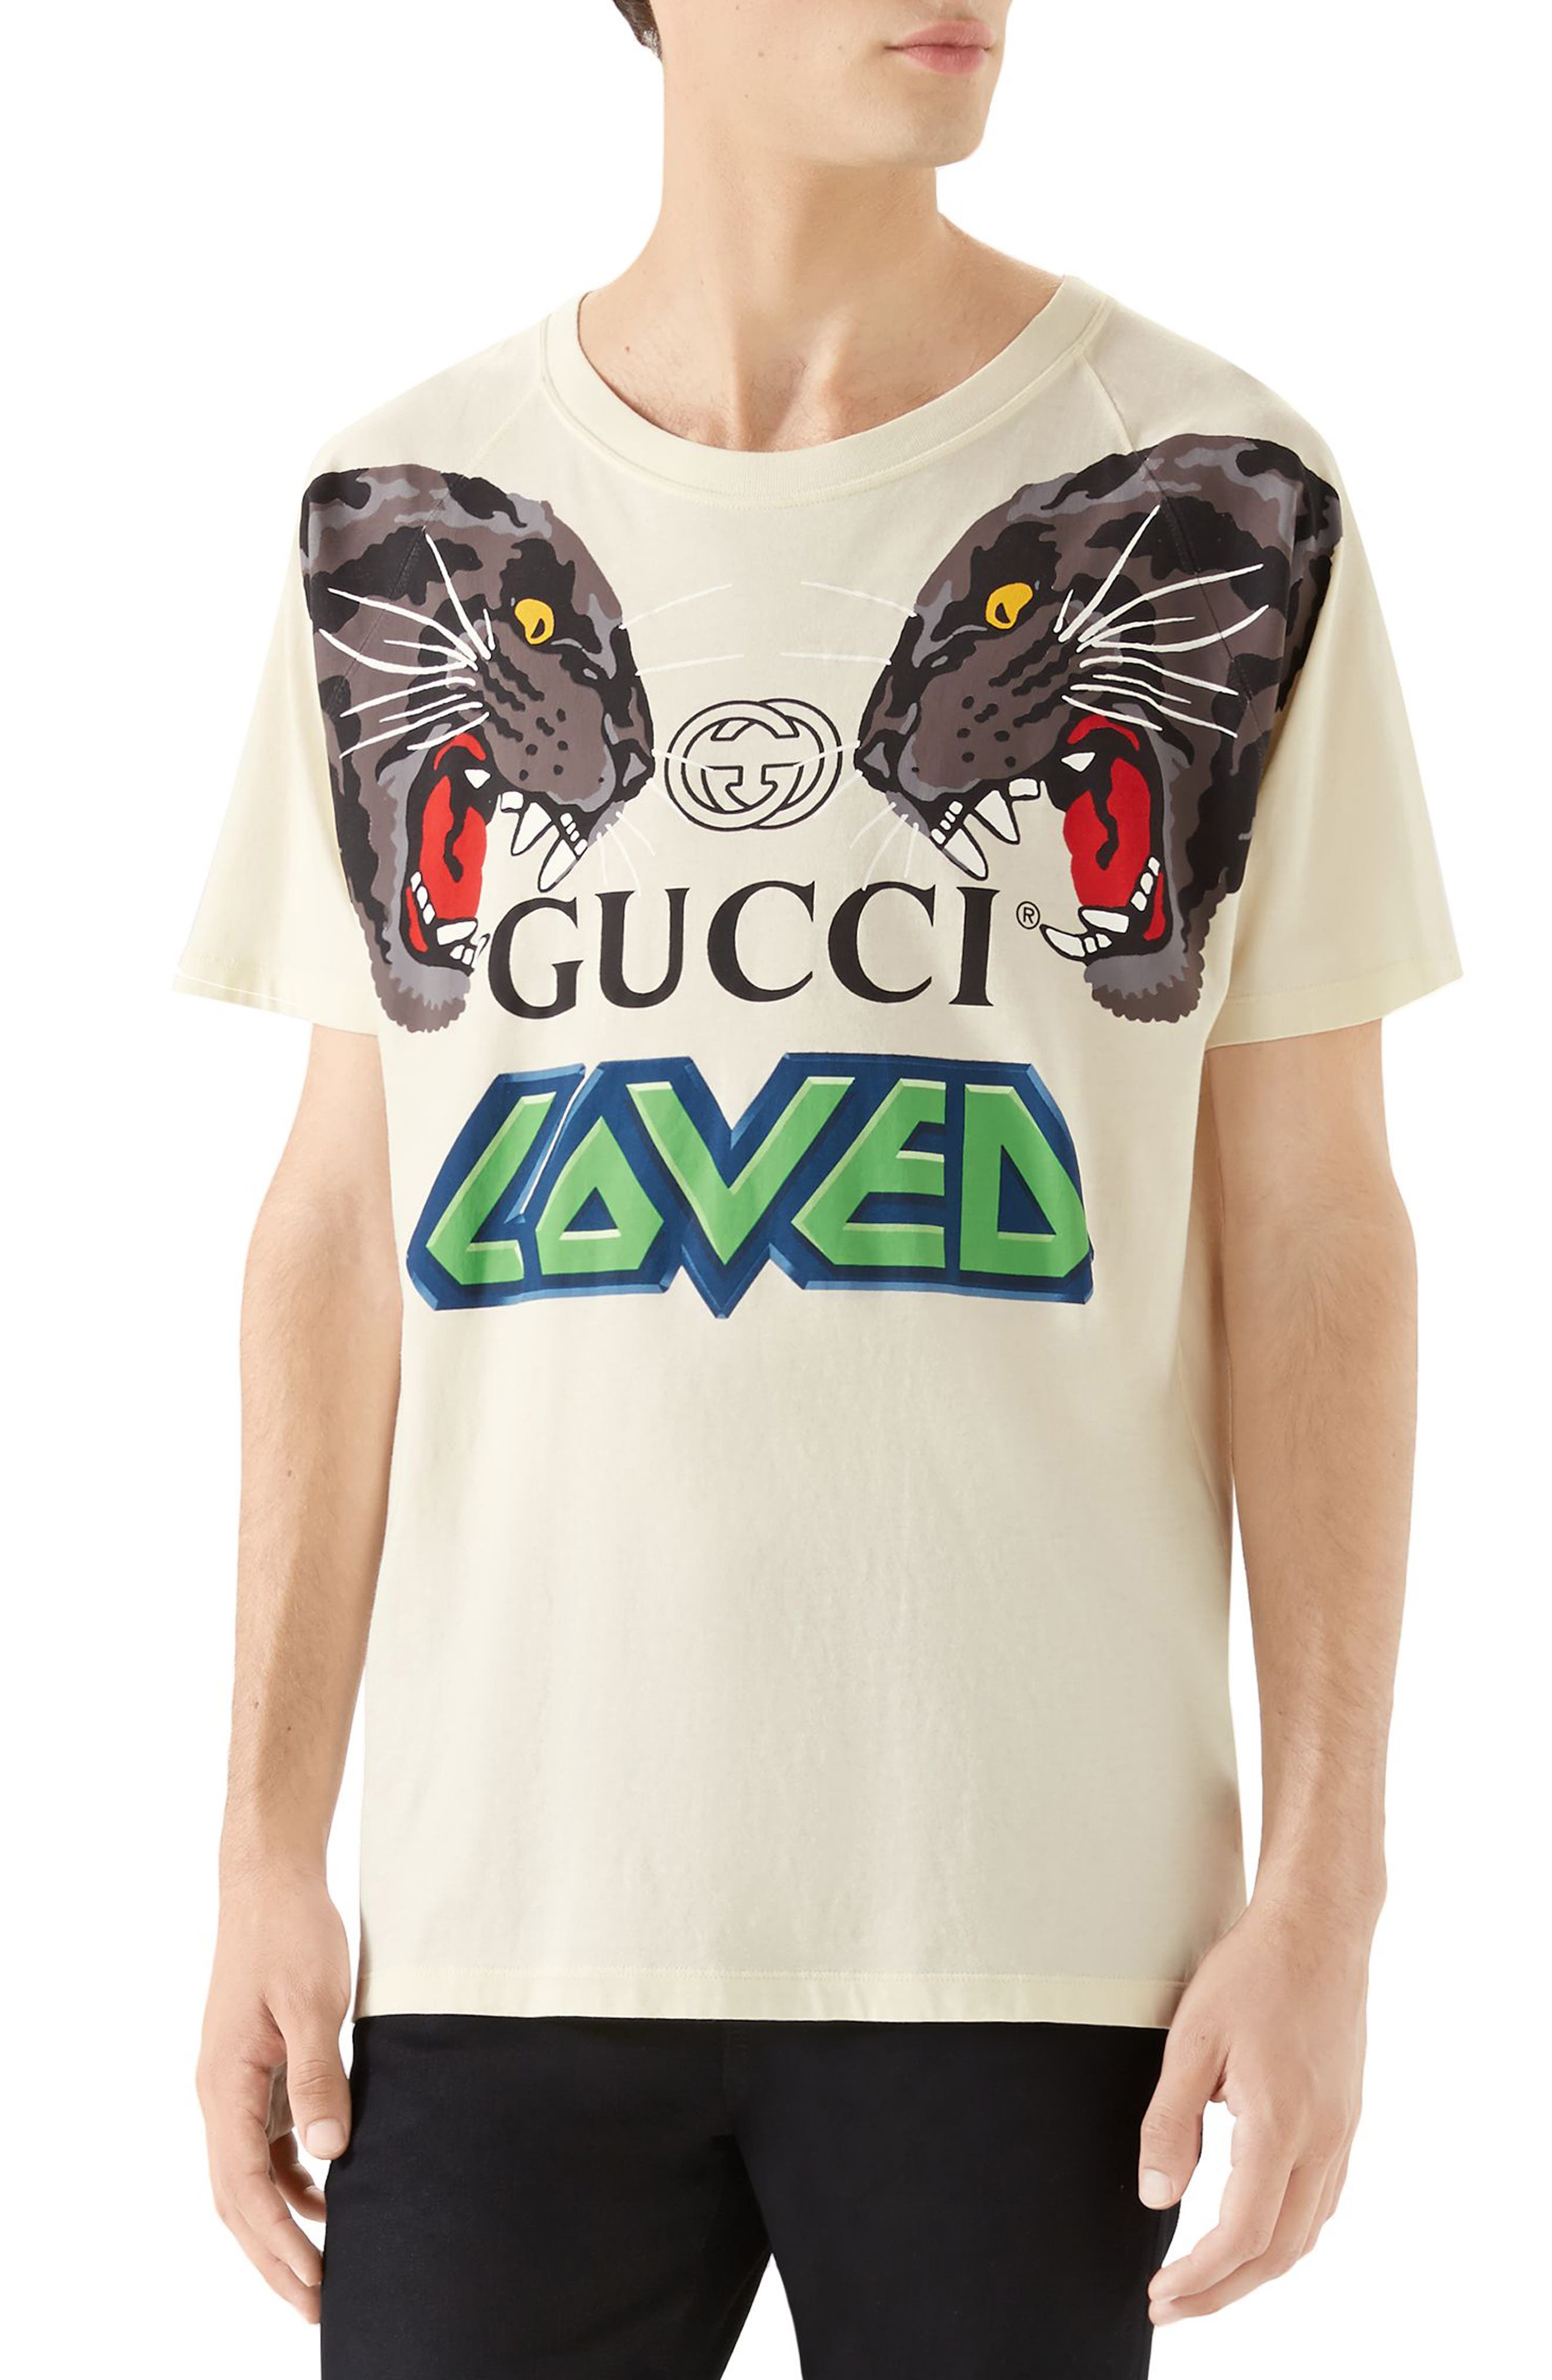 Gucci Mens T Shirt Size Chart